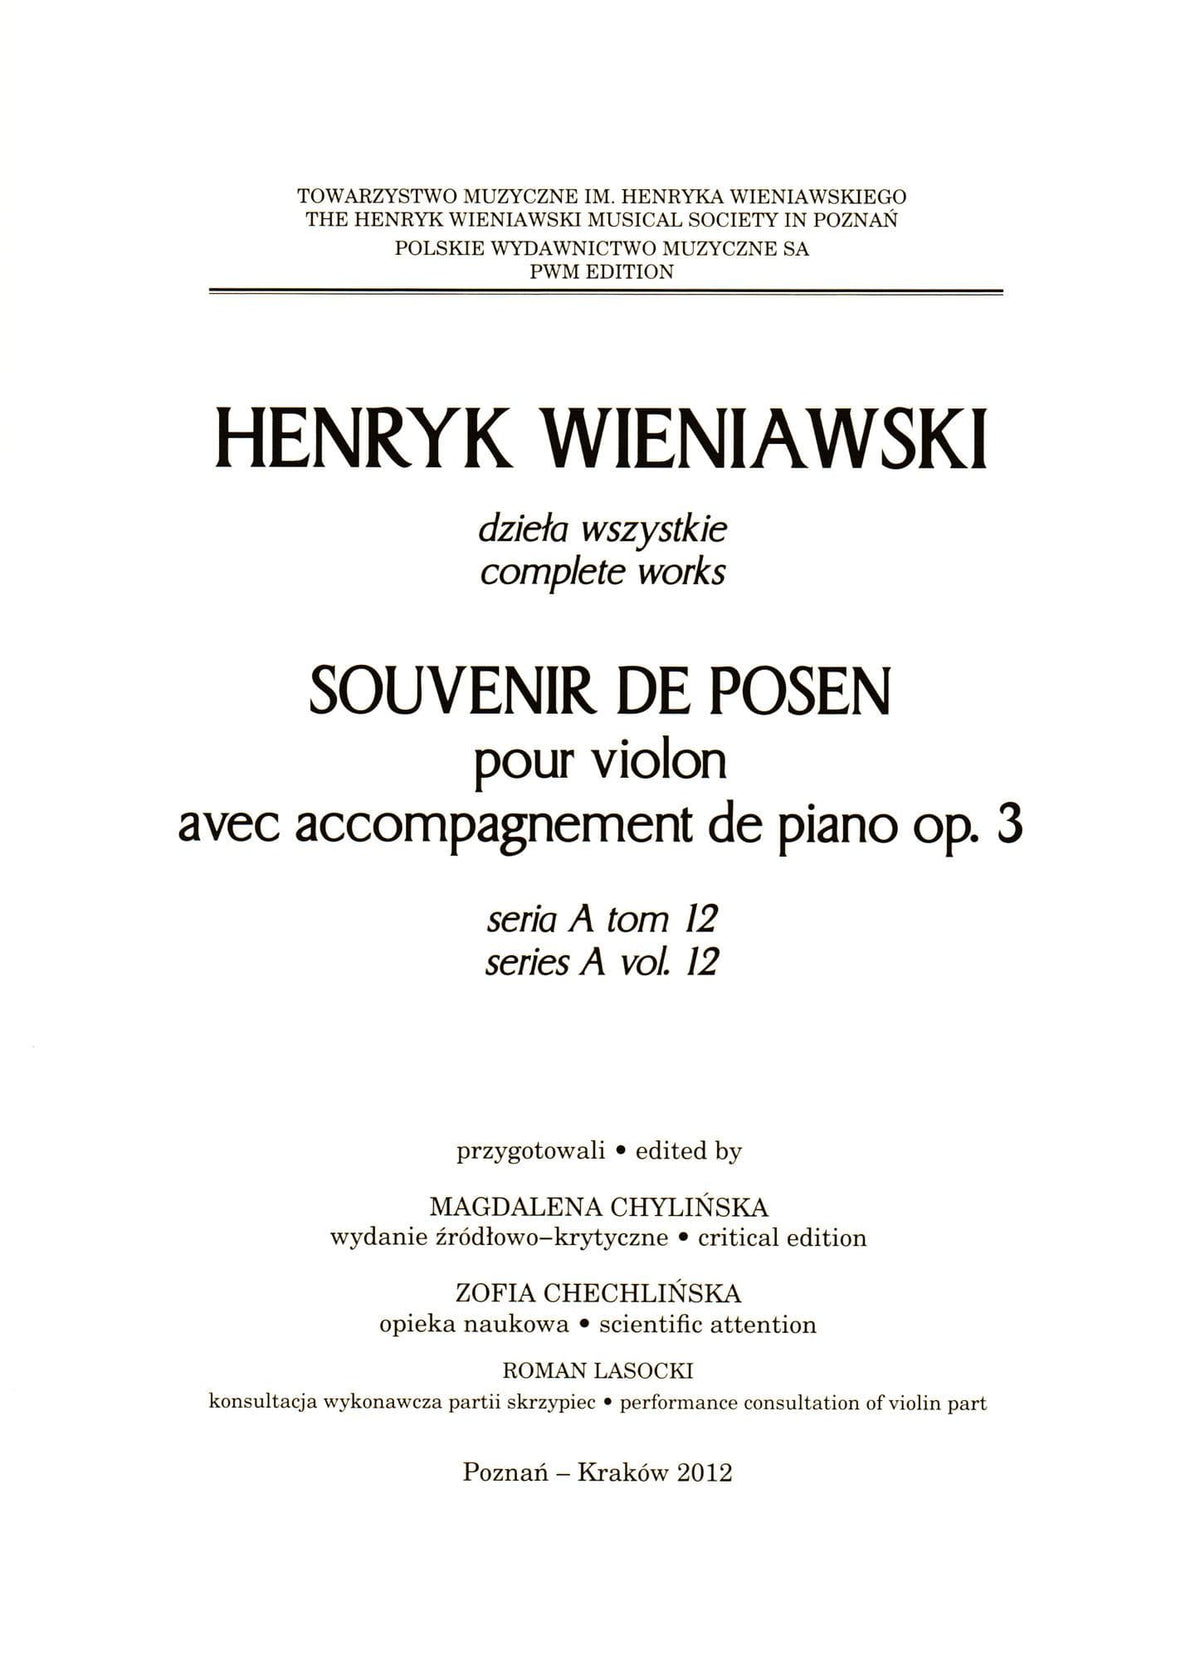 Wieniawski, Henryk - Souvenir de Posen, Opus 3 - for Violin and Piano - PWM Edition